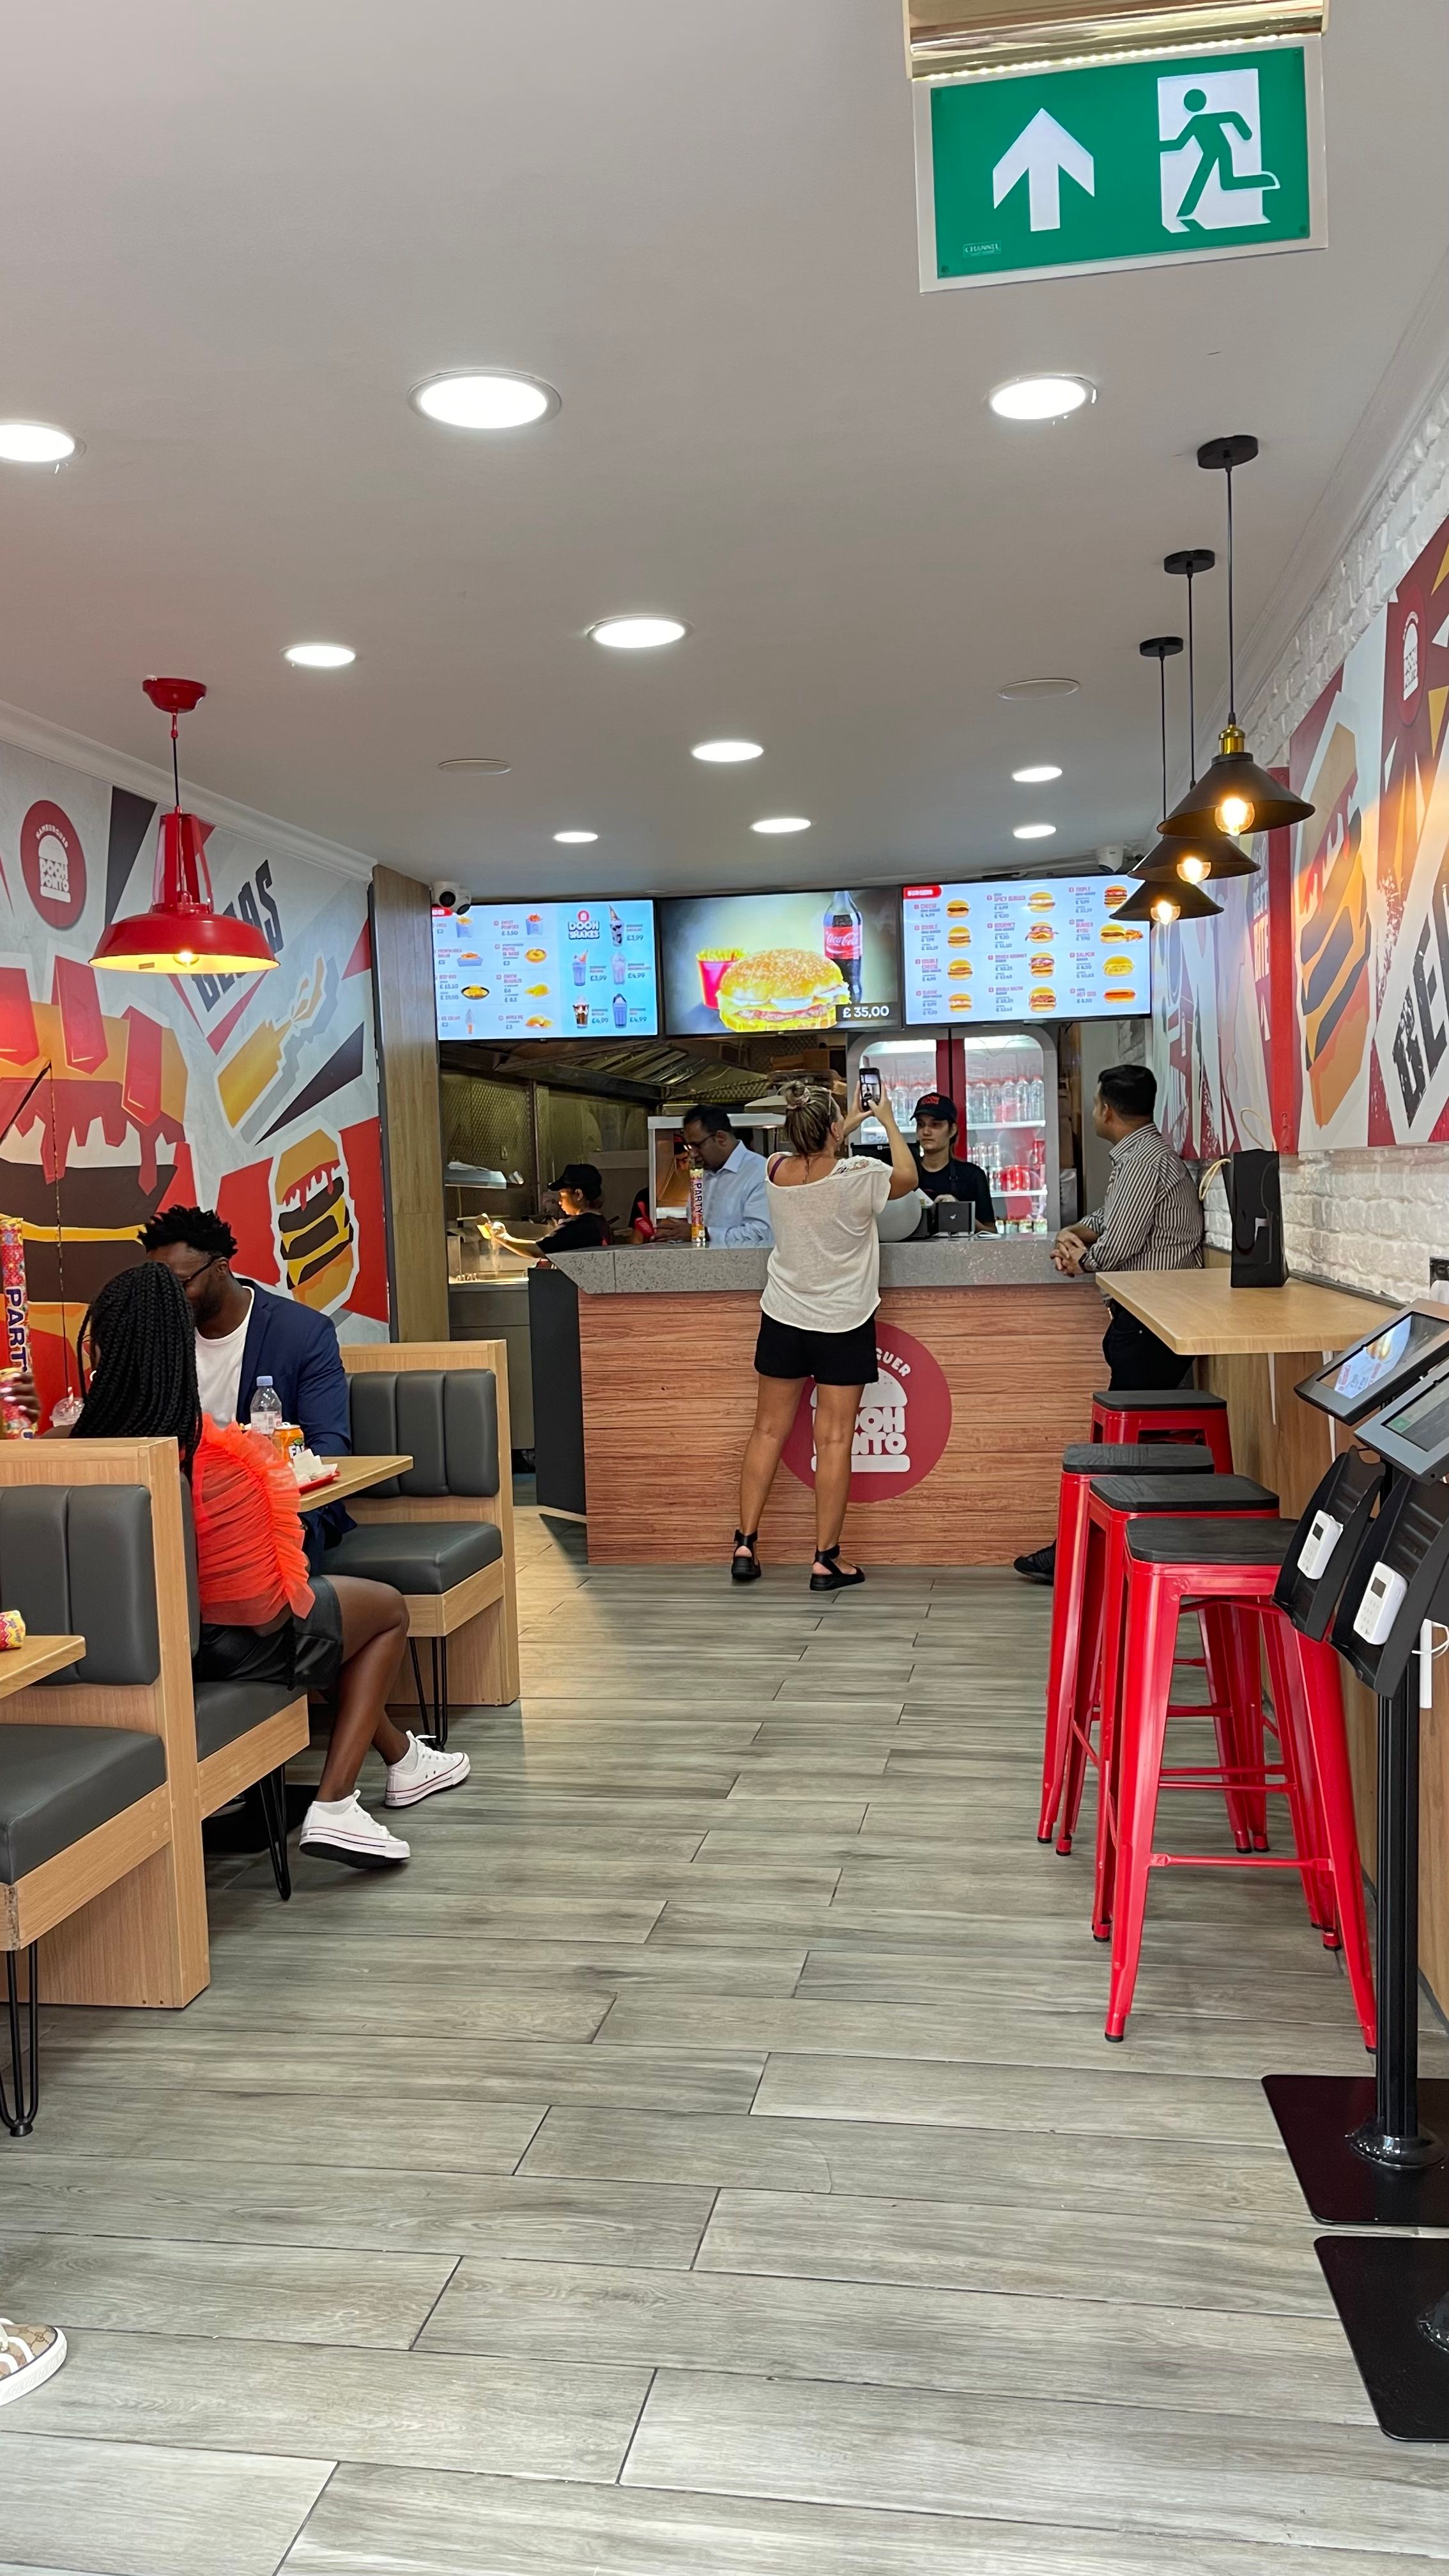 Dooh Ponto - Portuguese Burgers opens in London